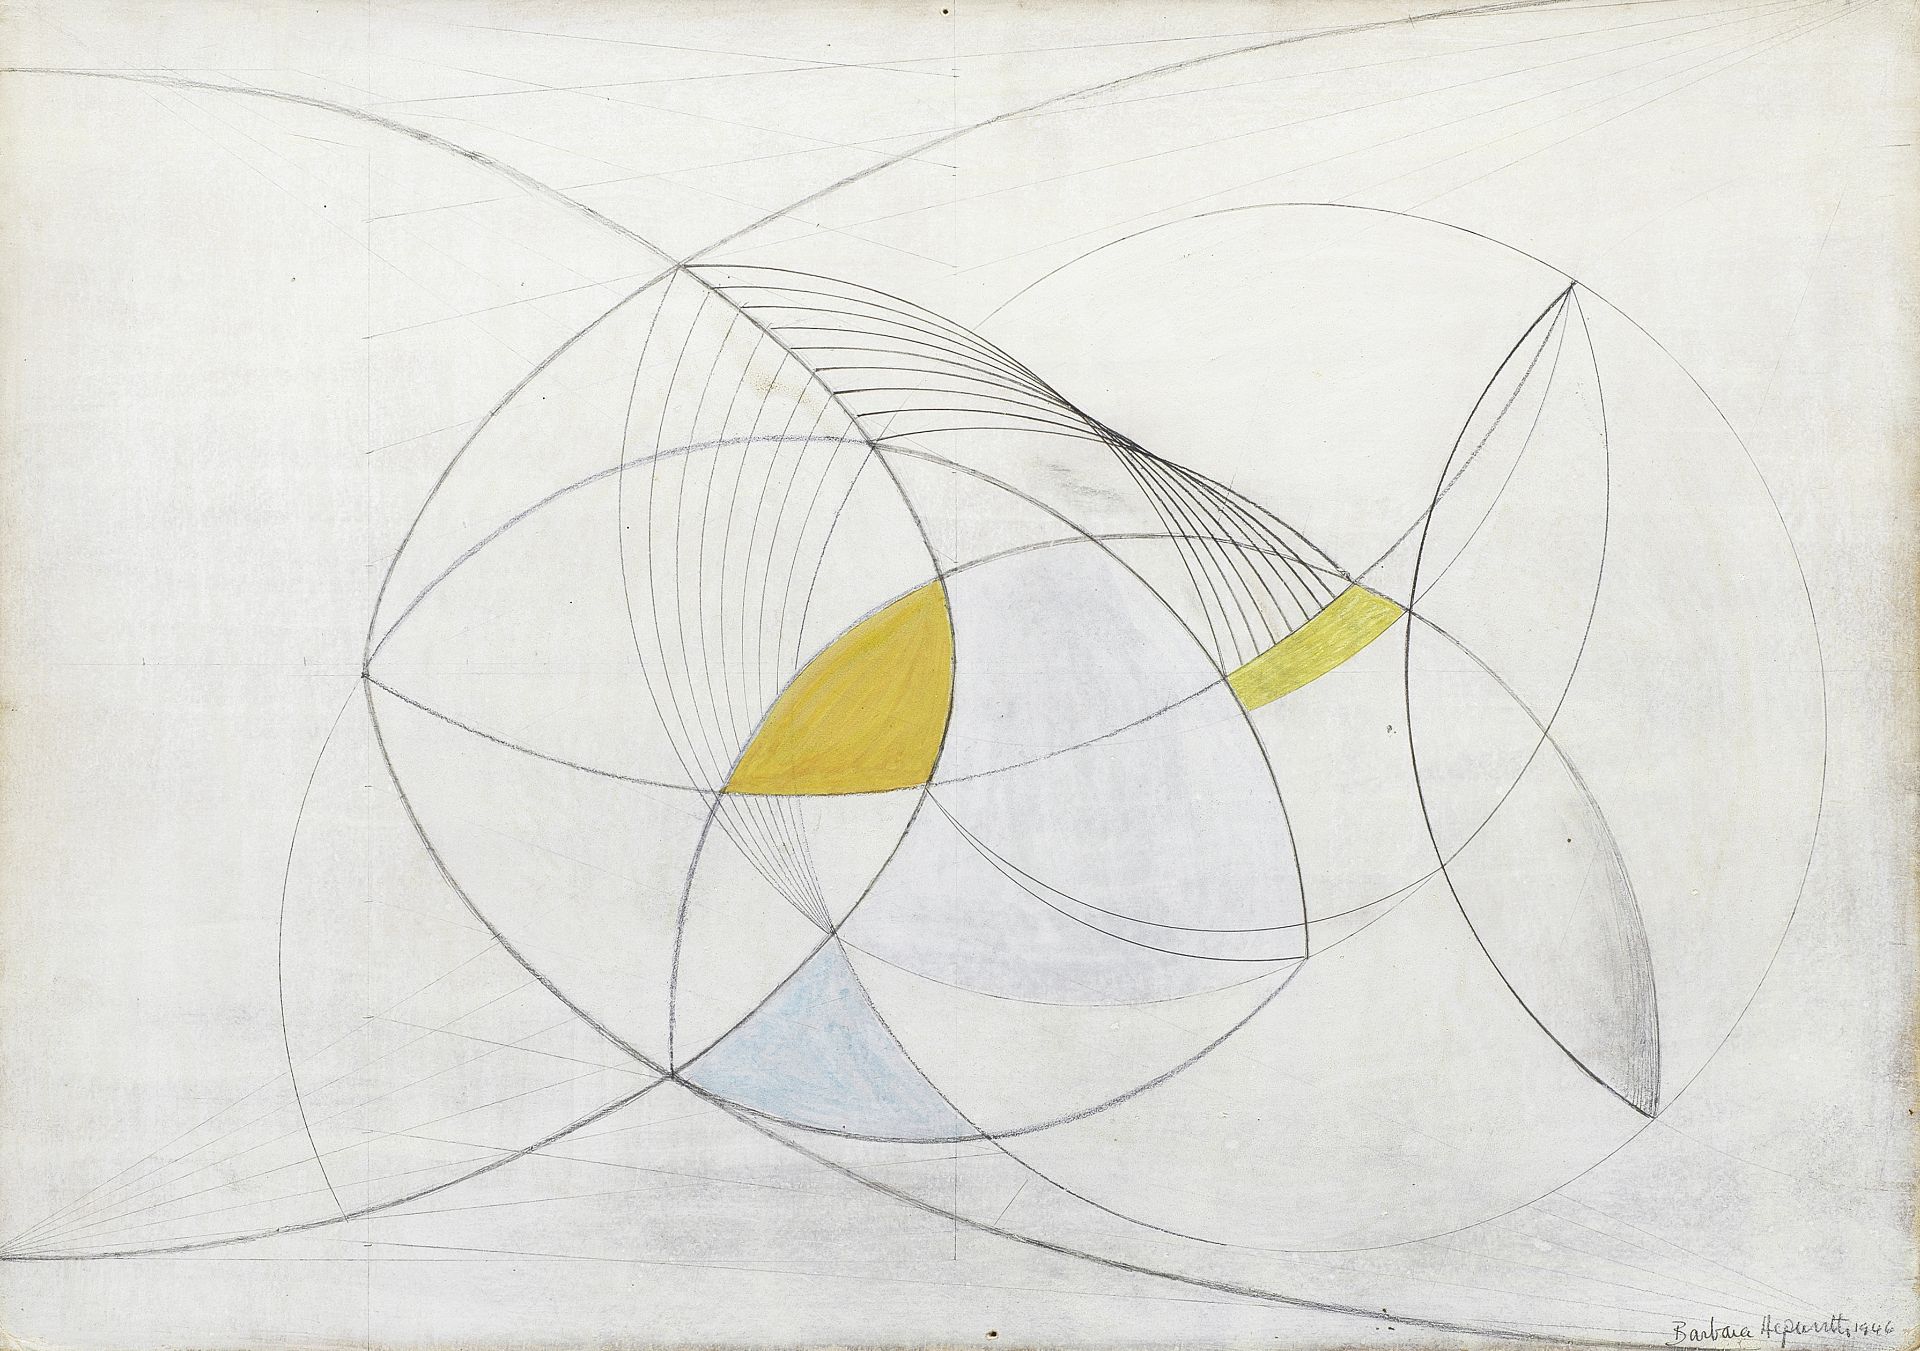 Dame Barbara Hepworth (British, 1903-1975) Intersection 26 x 37.7 cm. (10 1/4 x 14 3/4 in.)